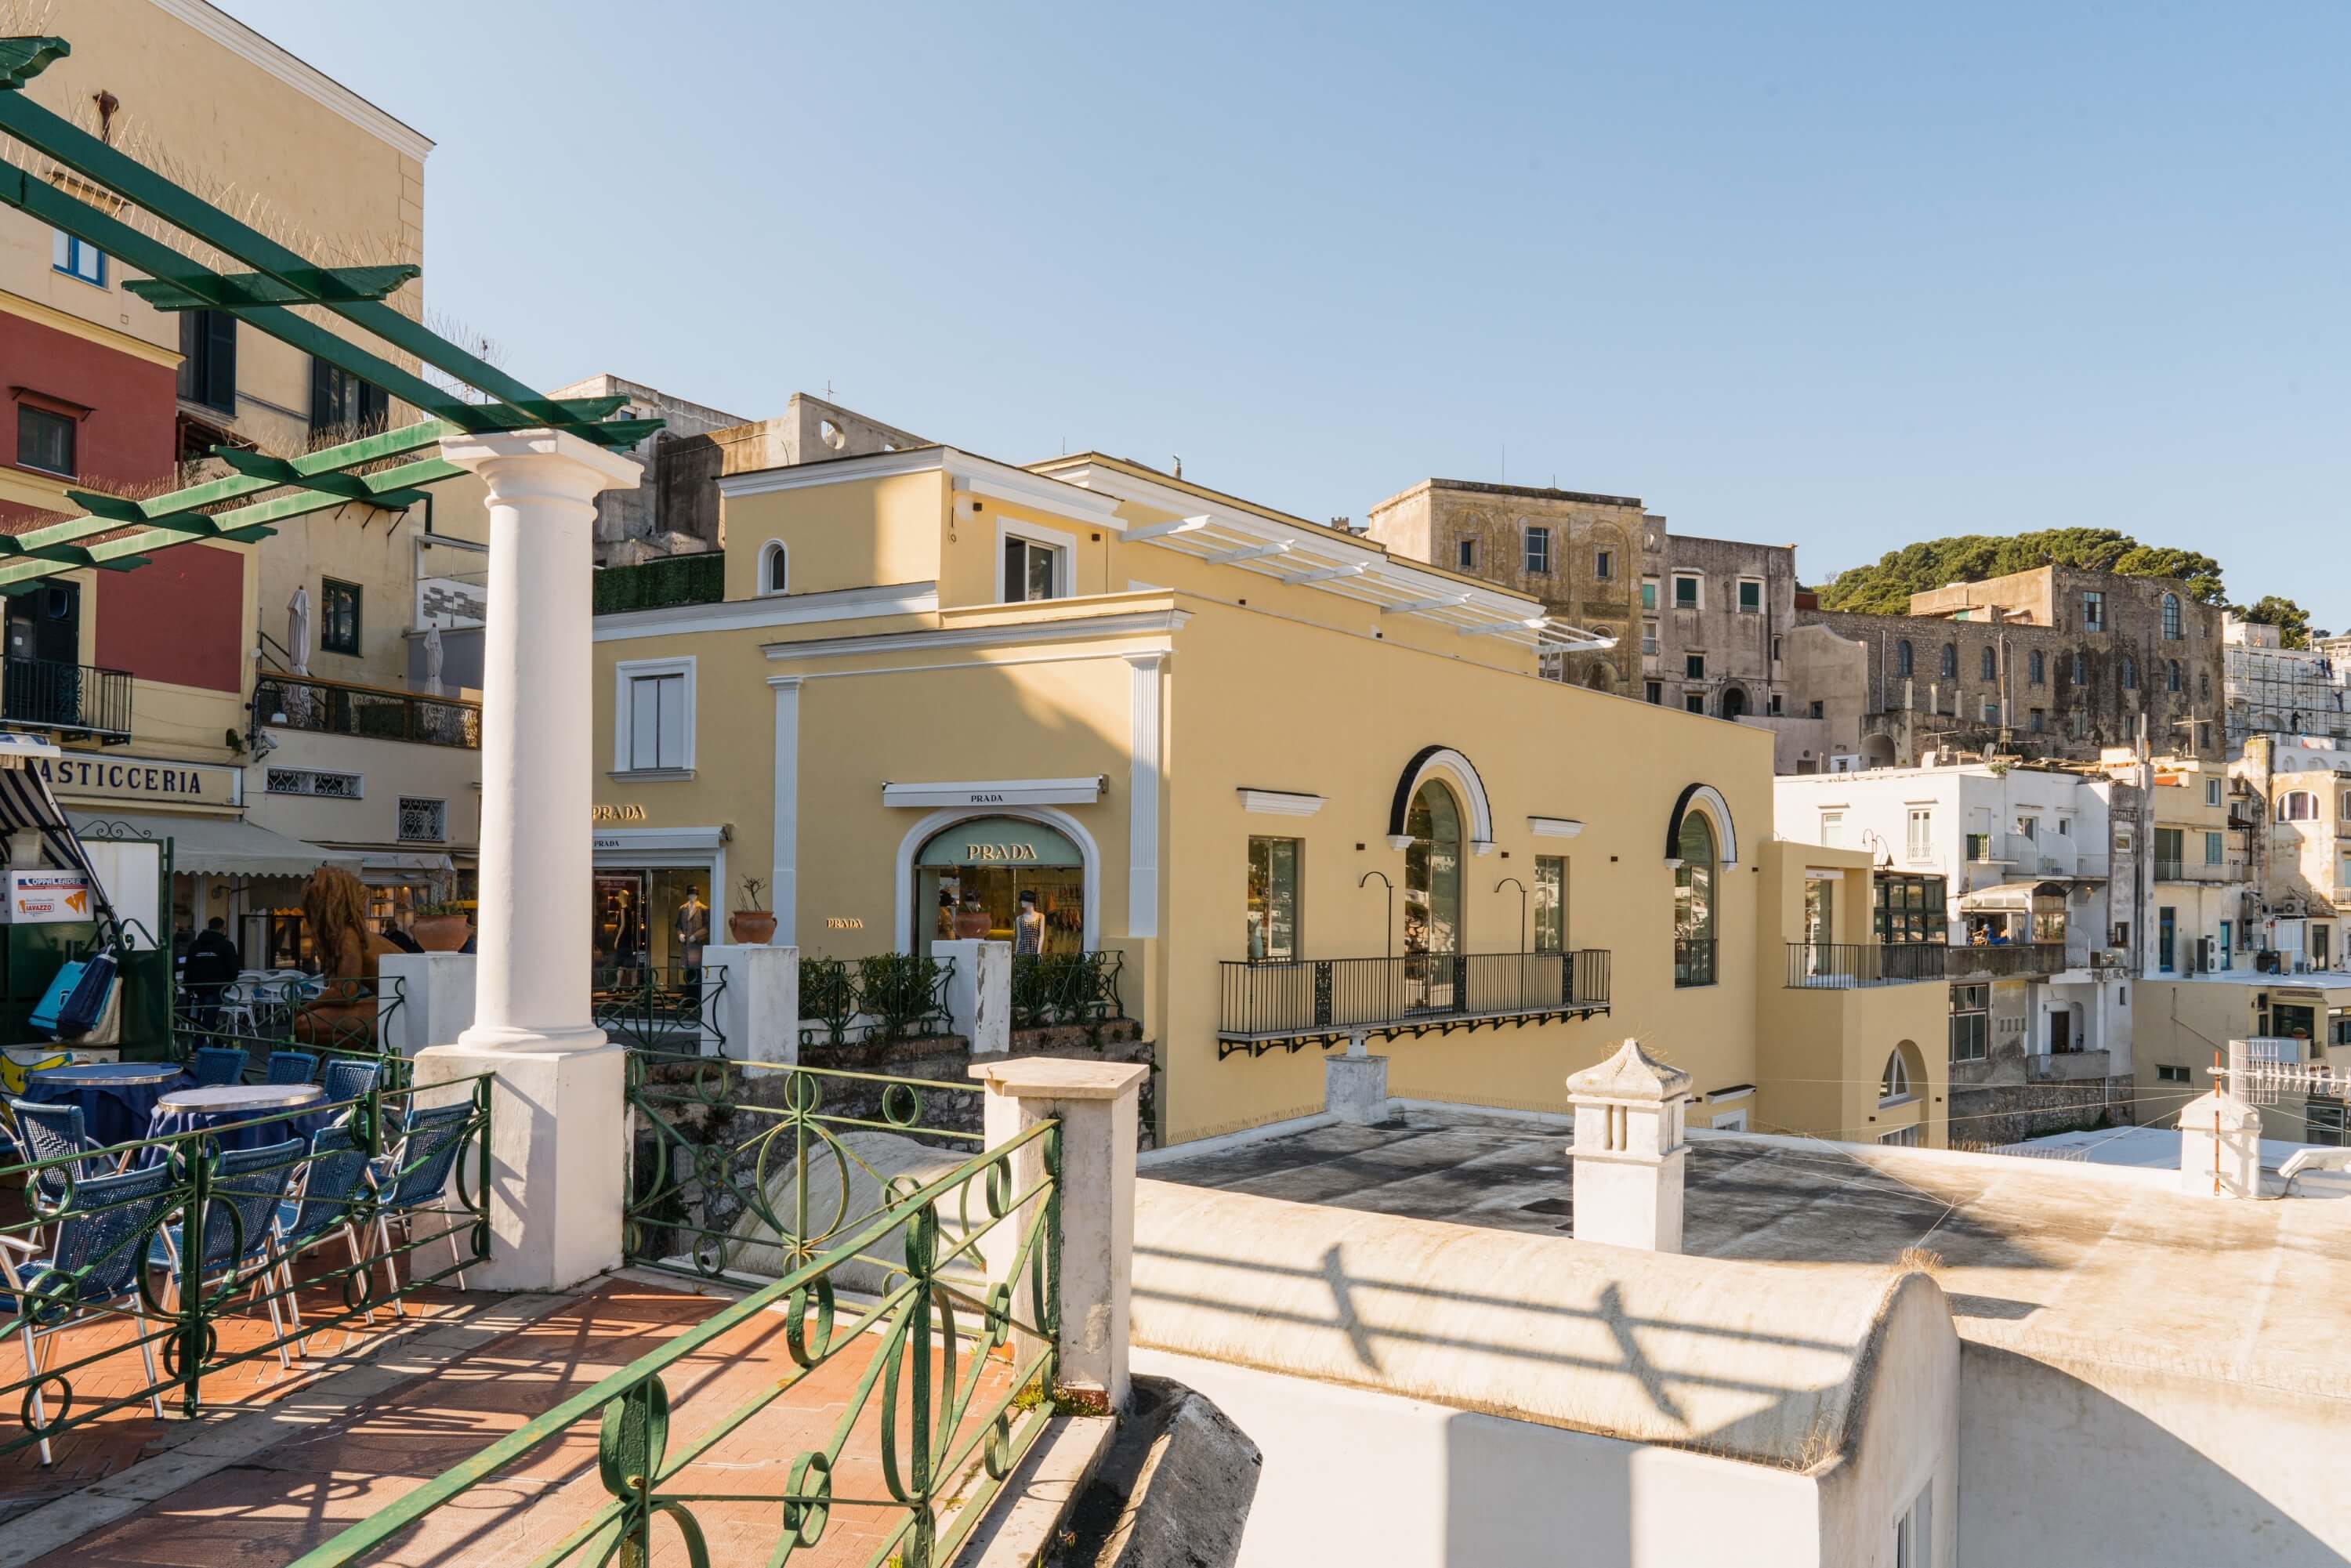 Palazzo M Capri: Elegance and Refinement